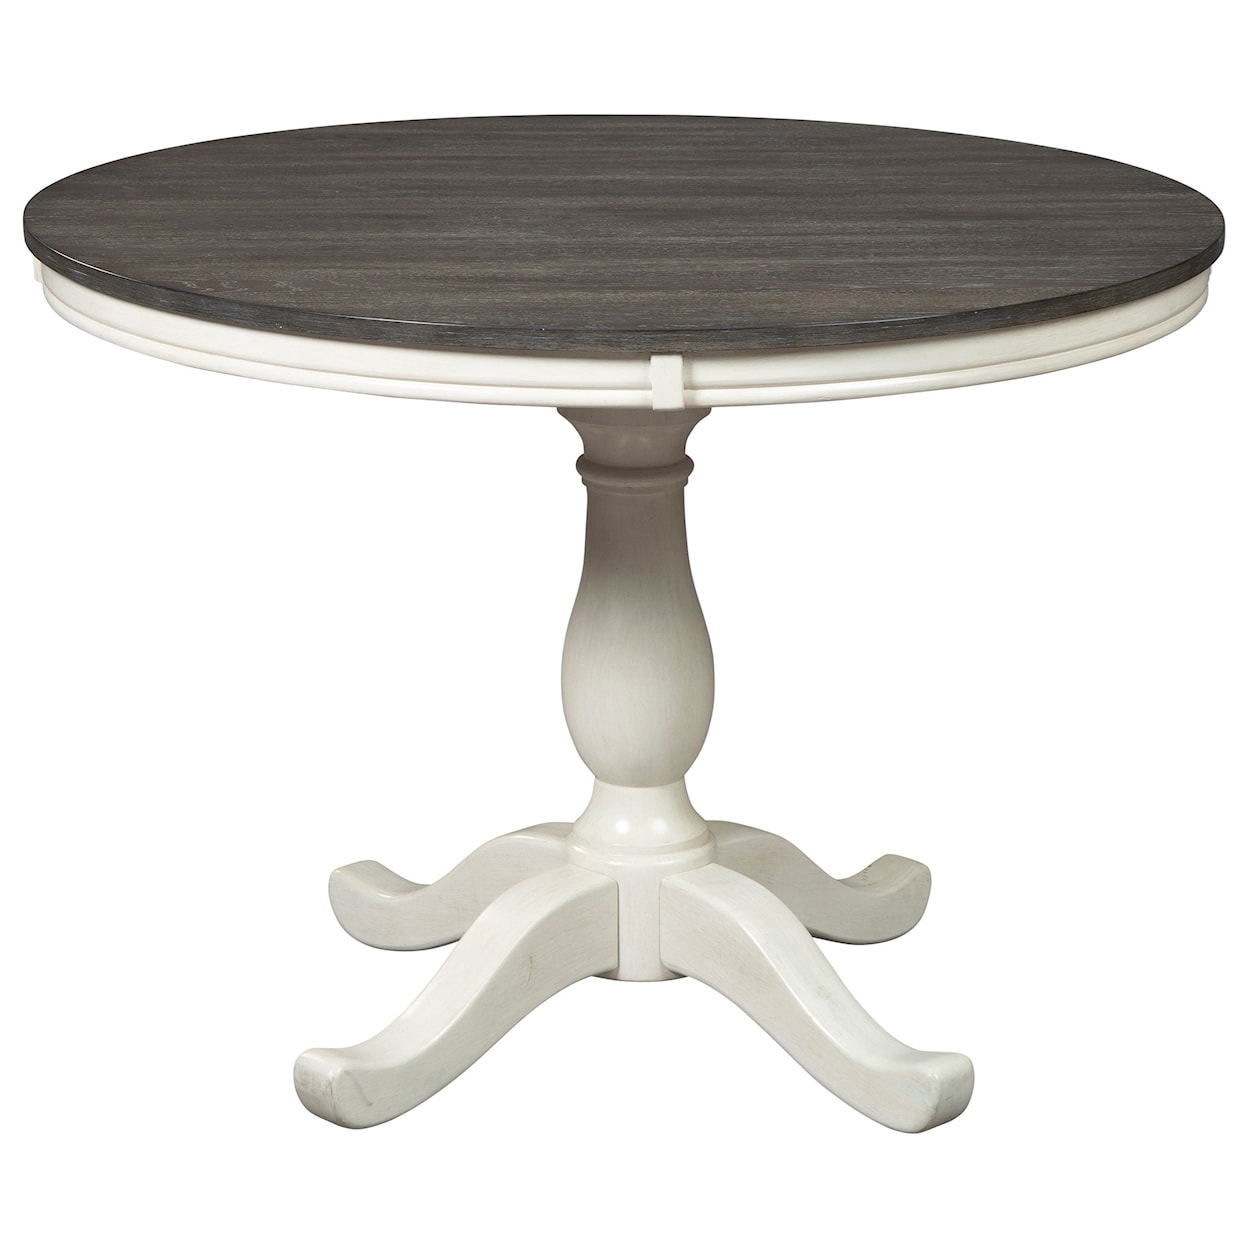 Ashley Furniture Signature Design Nelling 5-Piece Round Dining Table Set